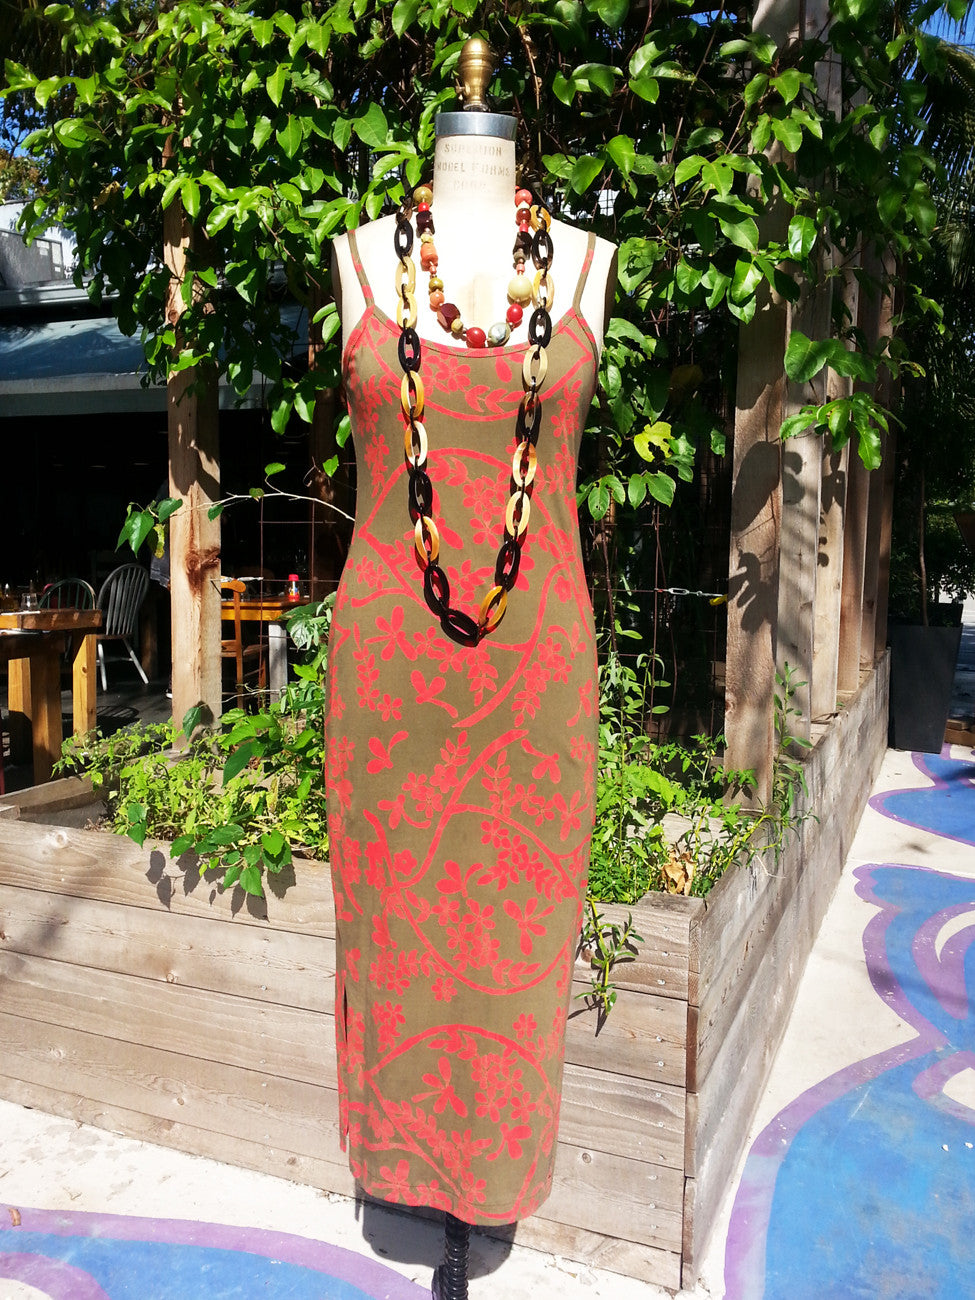 Batik Beach Dress Matisse Olive and Red